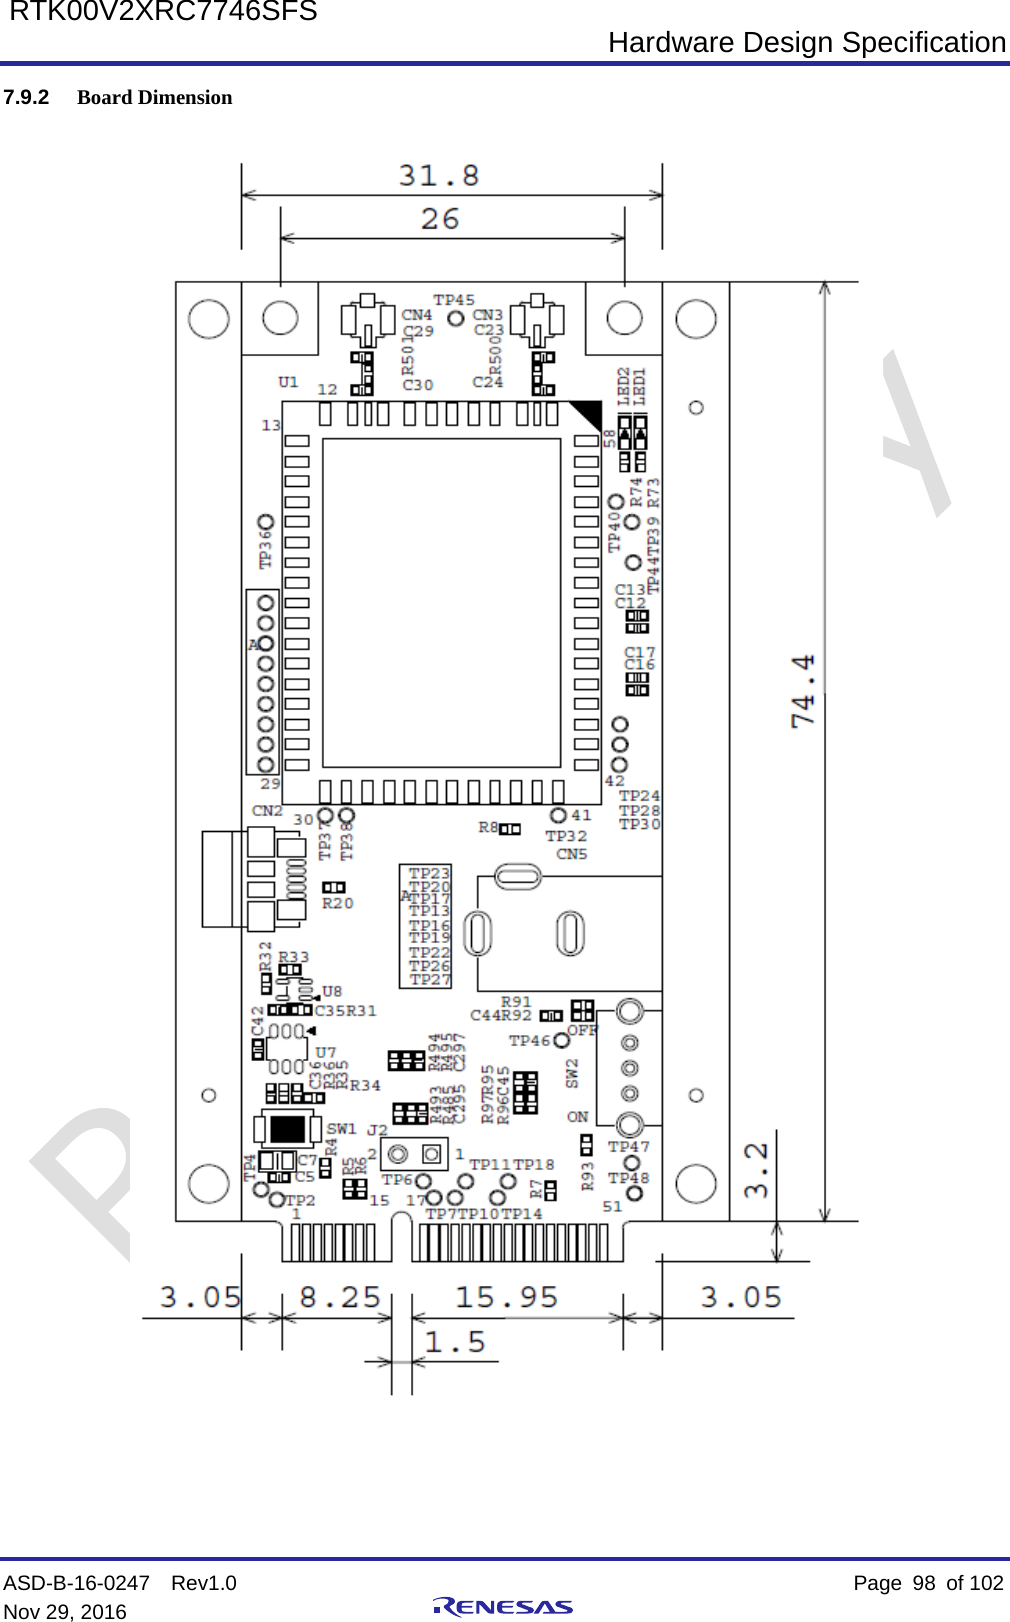  Hardware Design Specification ASD-B-16-0247  Rev1.0    Page  98 of 102 Nov 29, 2016     RTK00V2XRC7746SFS 7.9.2 Board Dimension  